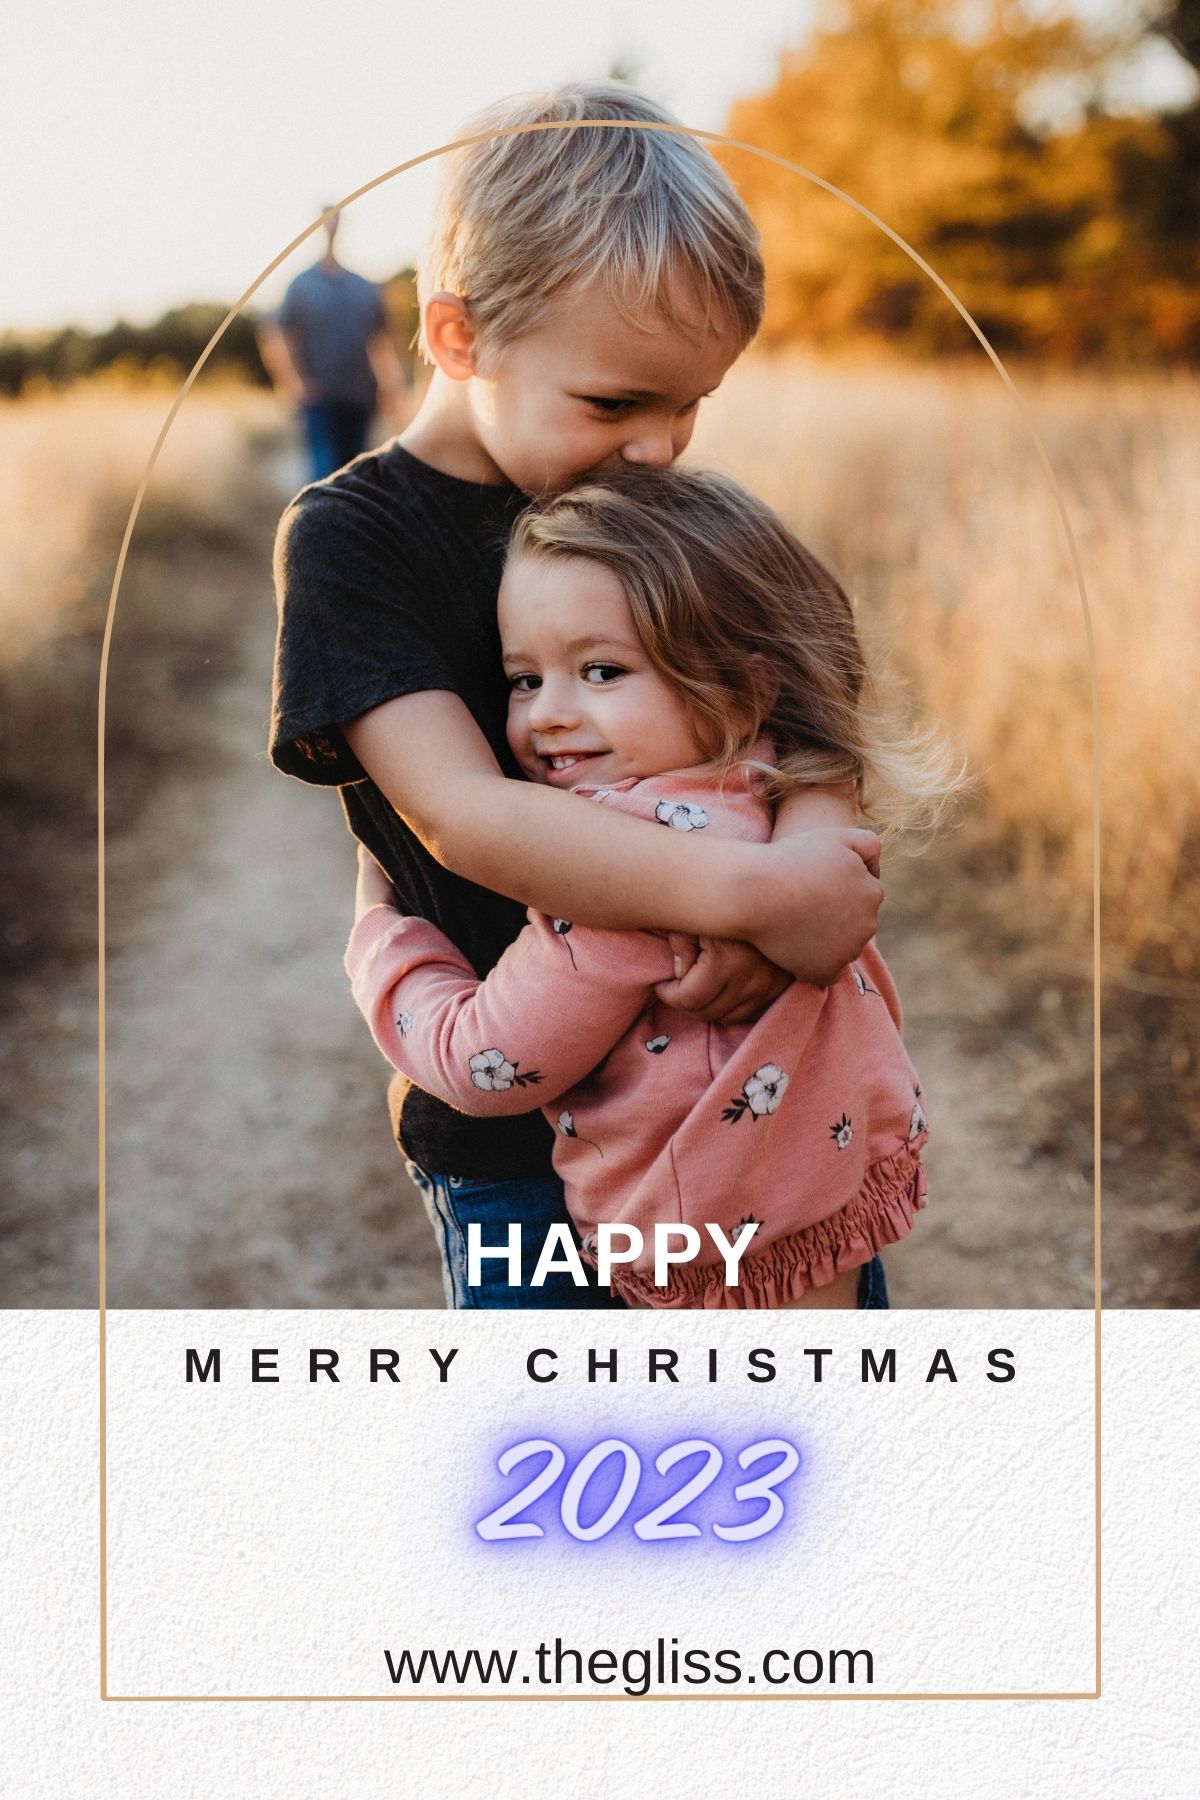 Family-Centric Christmas Cards